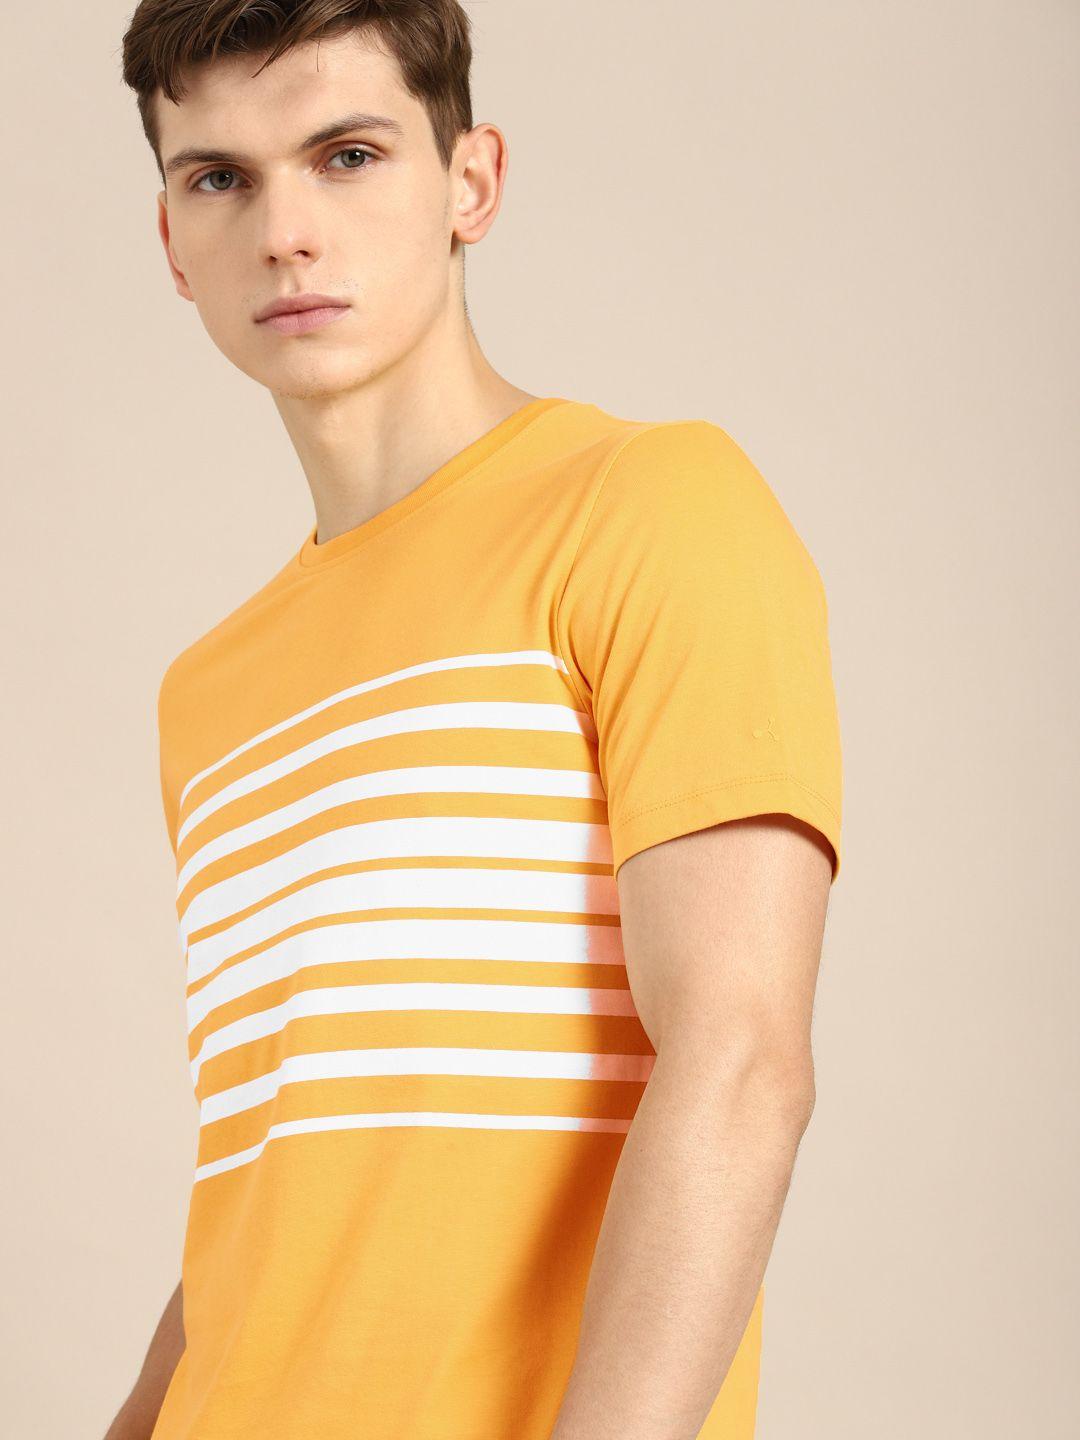 ether men yellow  white striped round neck pure cotton t-shirt